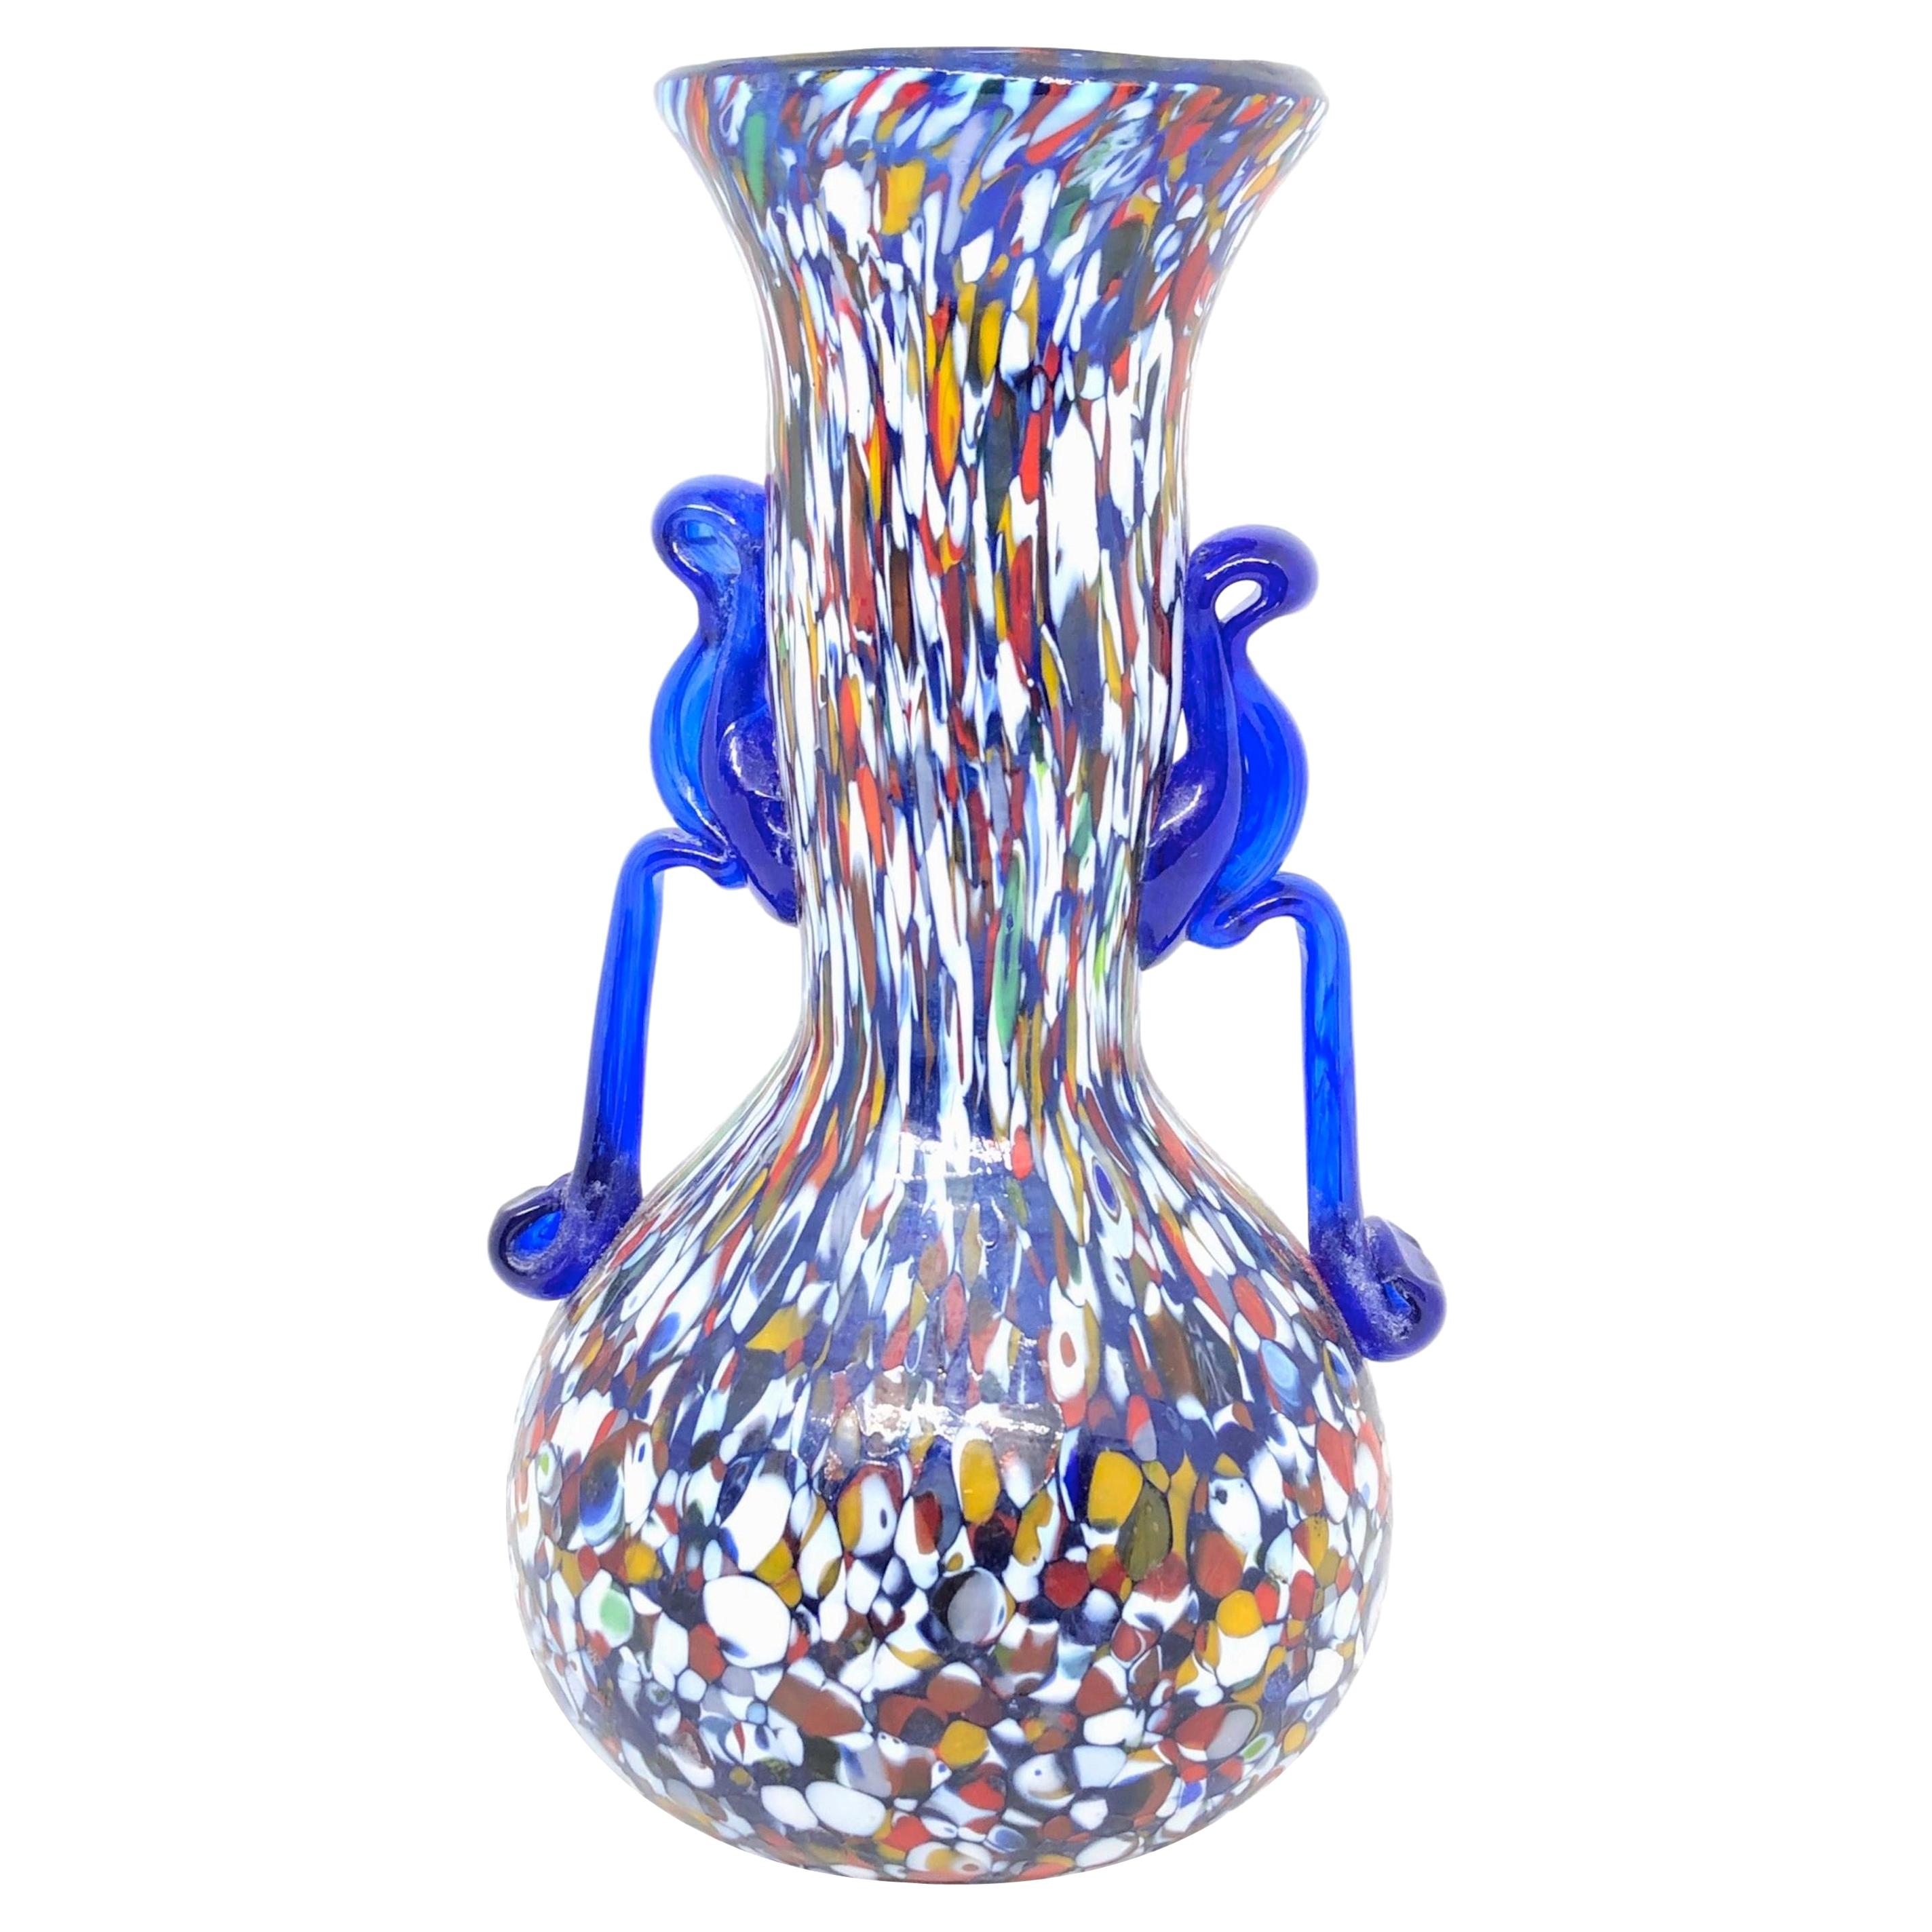 Fratelli Toso Murano Art Glass Neoclassical Urn Bud Vase, Italy, 1960s